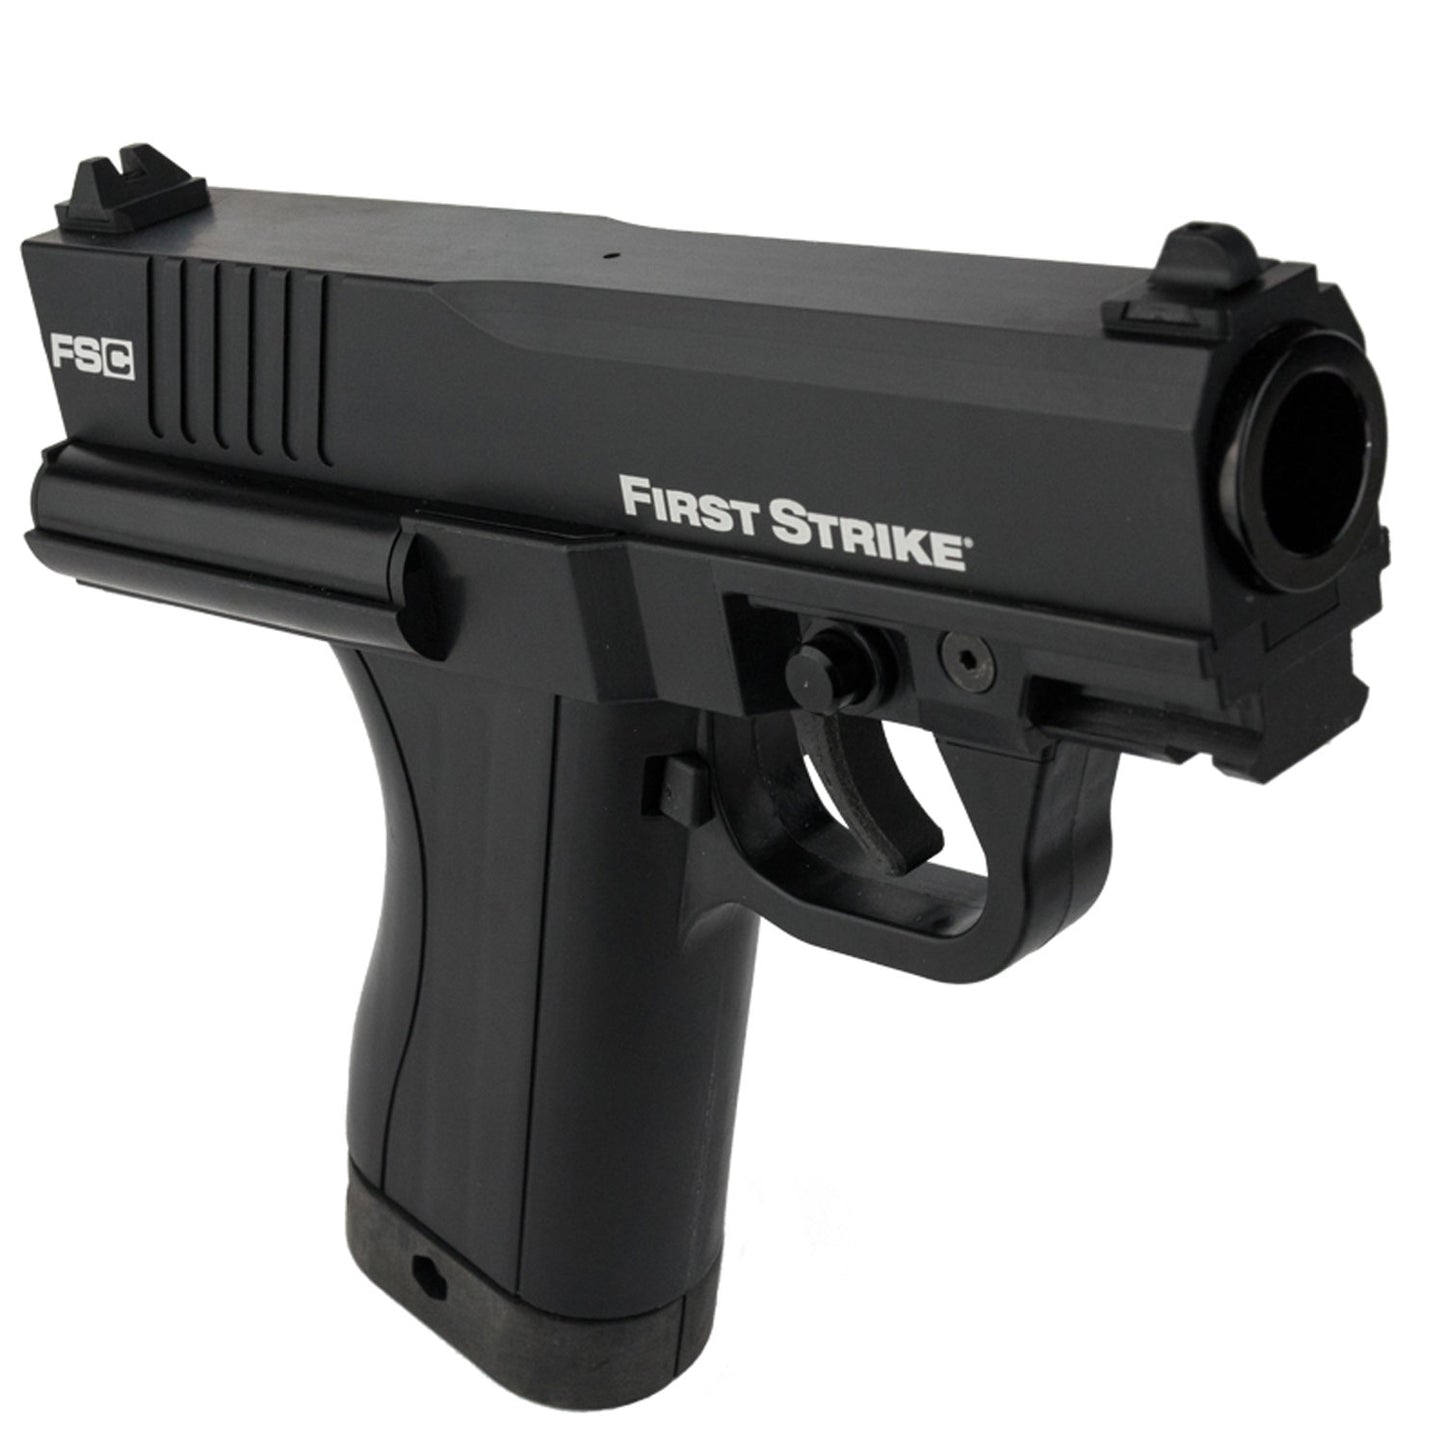 First Strike FSC (First Strike Compact) Paintball Pistol Black - First Strike